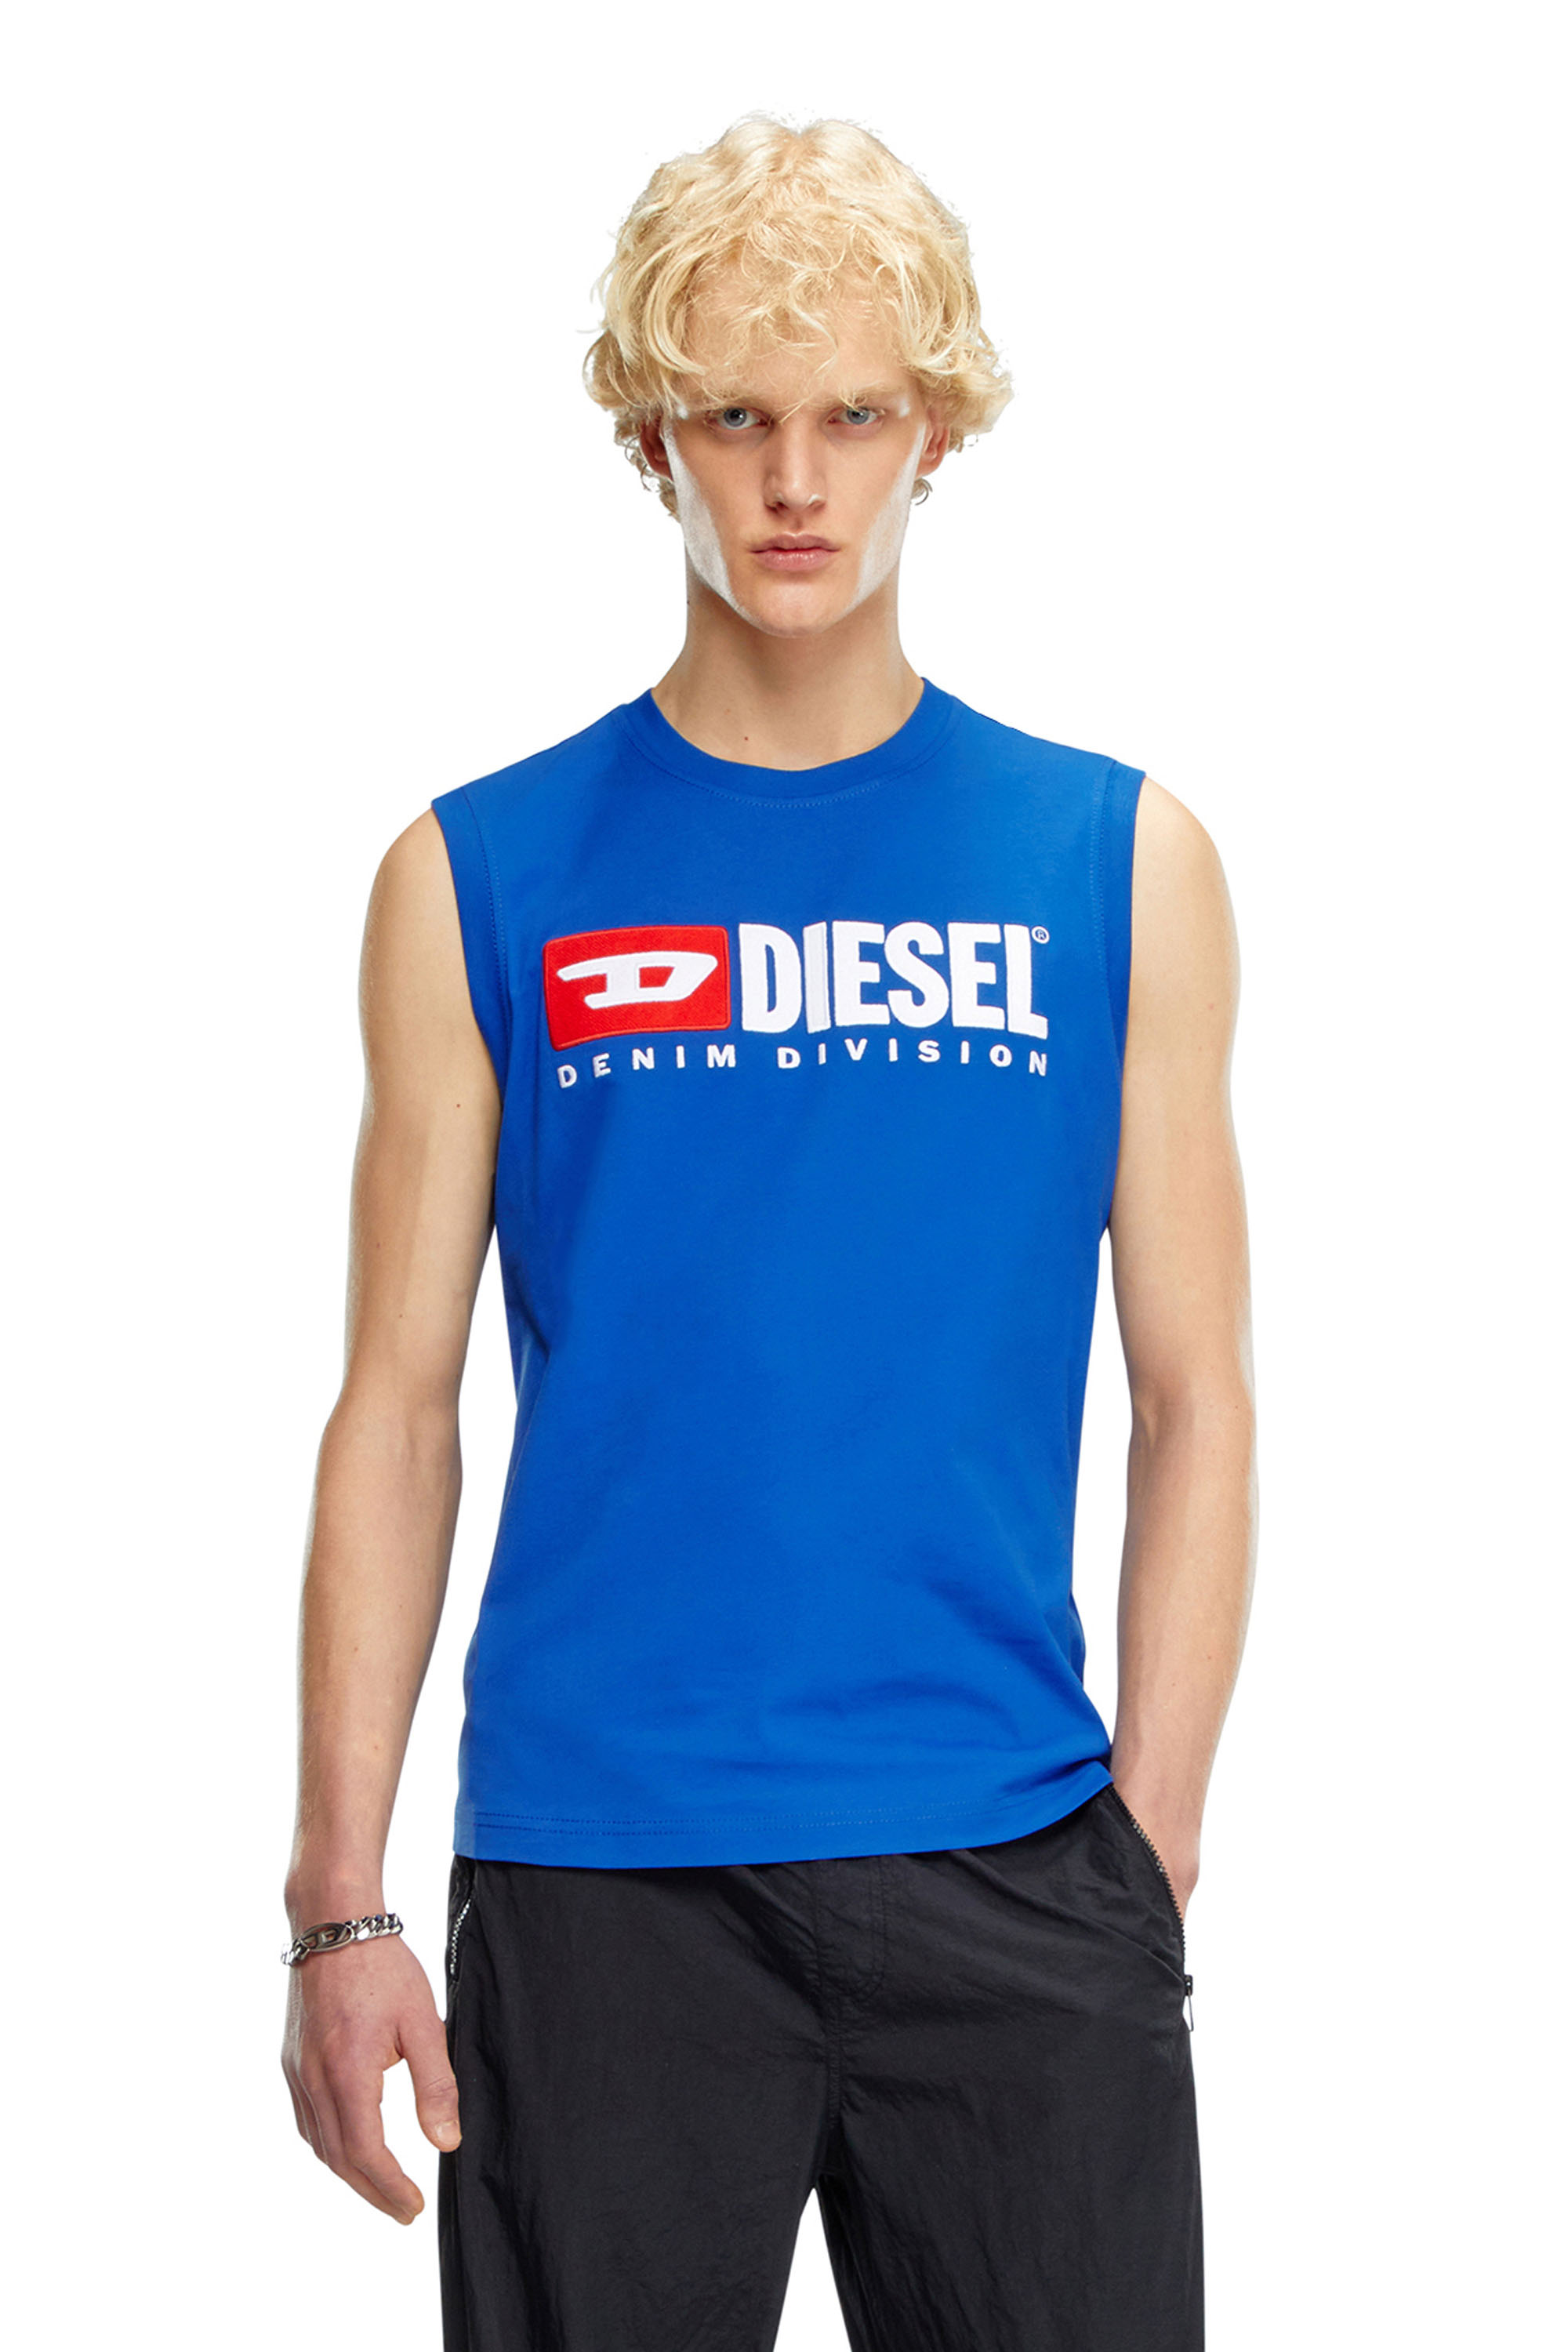 Diesel - T-ISCO-DIV, Blue - Image 1